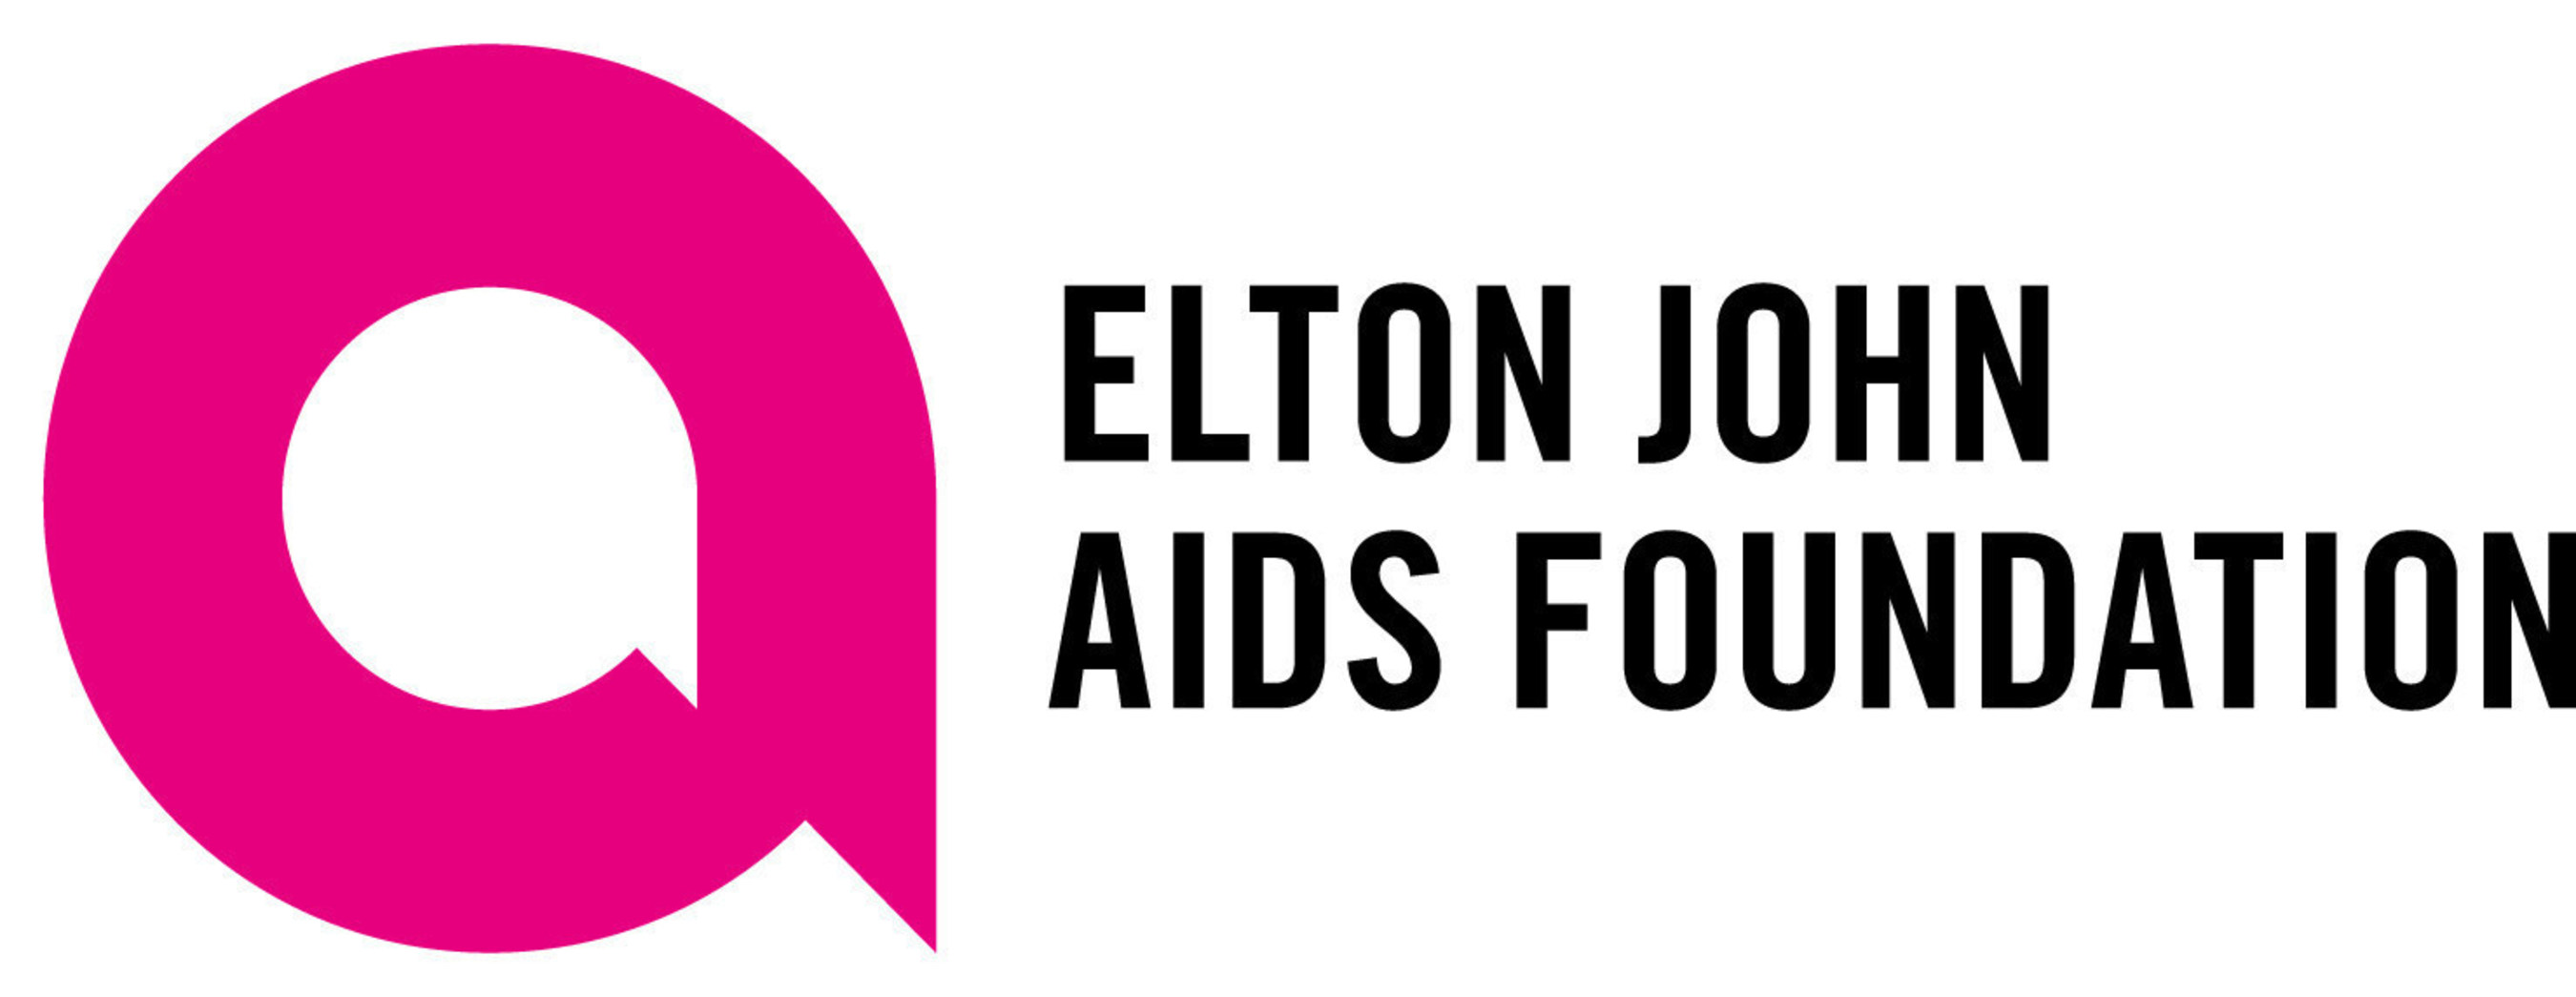 Elton John AIDS Foundation logo.